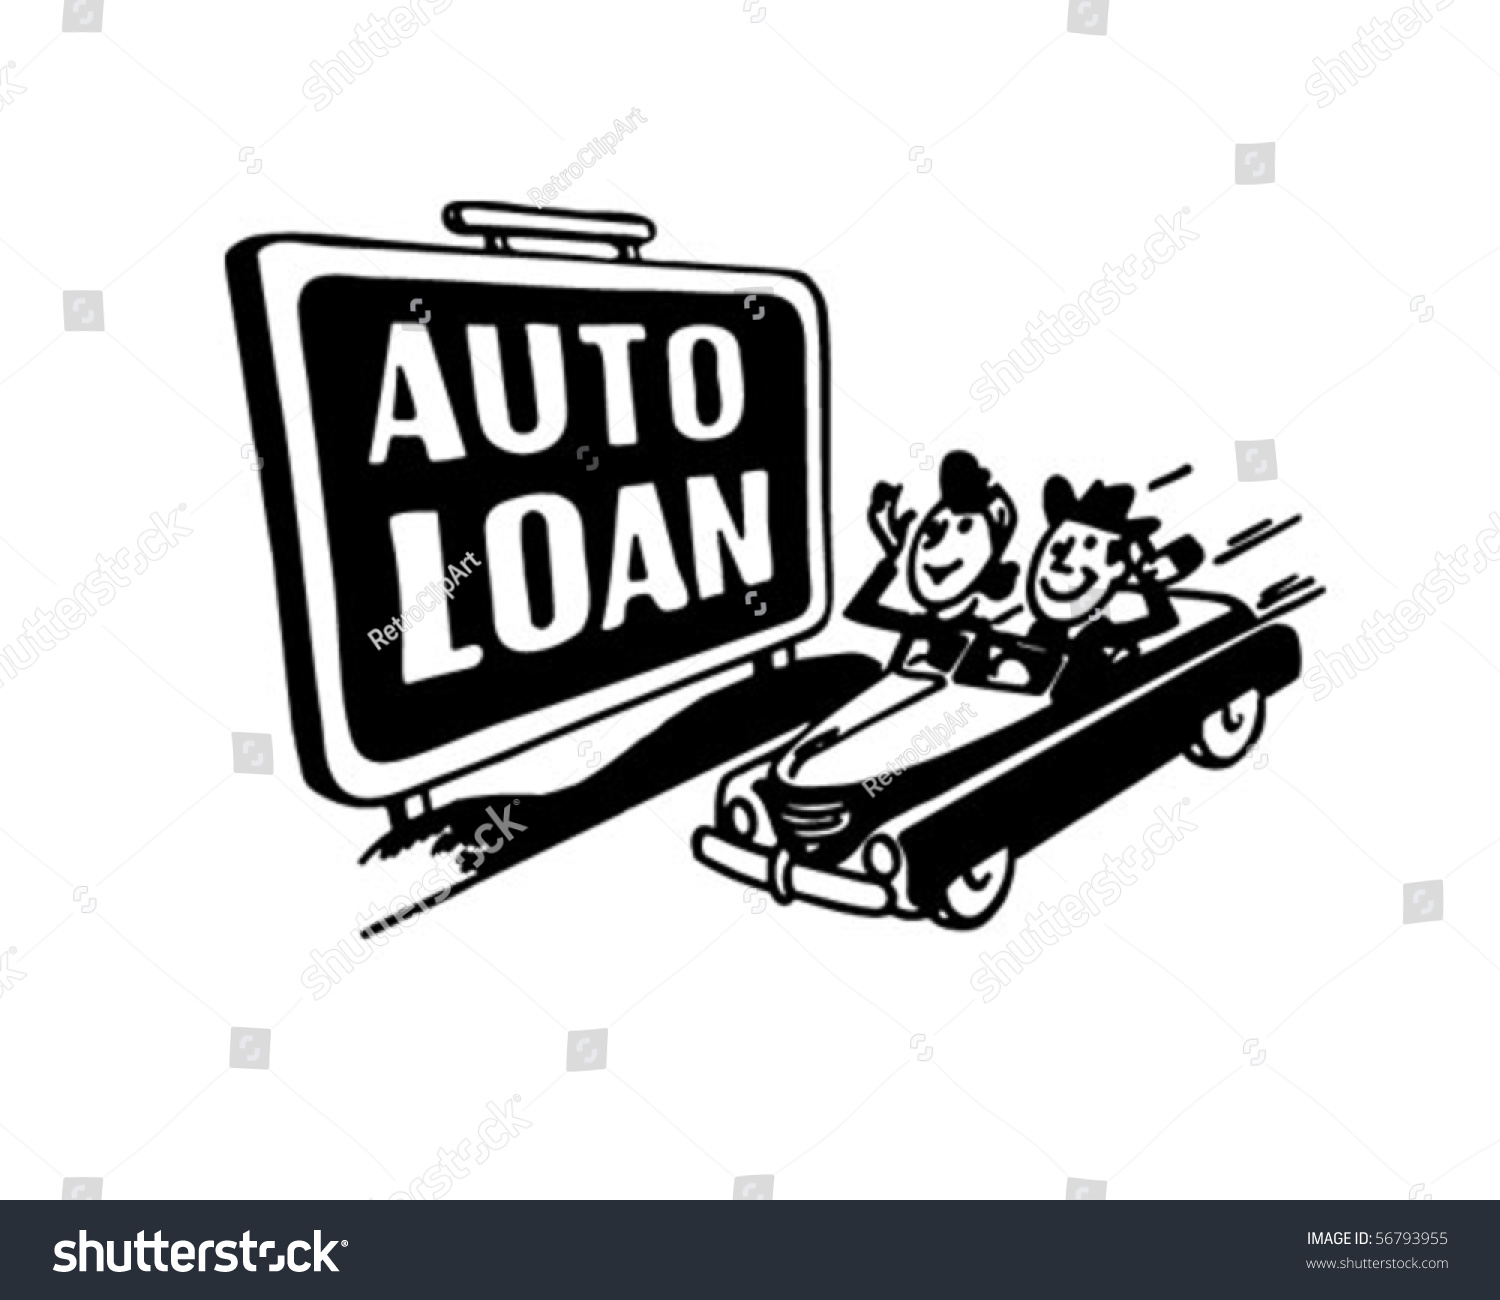 auto loan clipart - photo #6